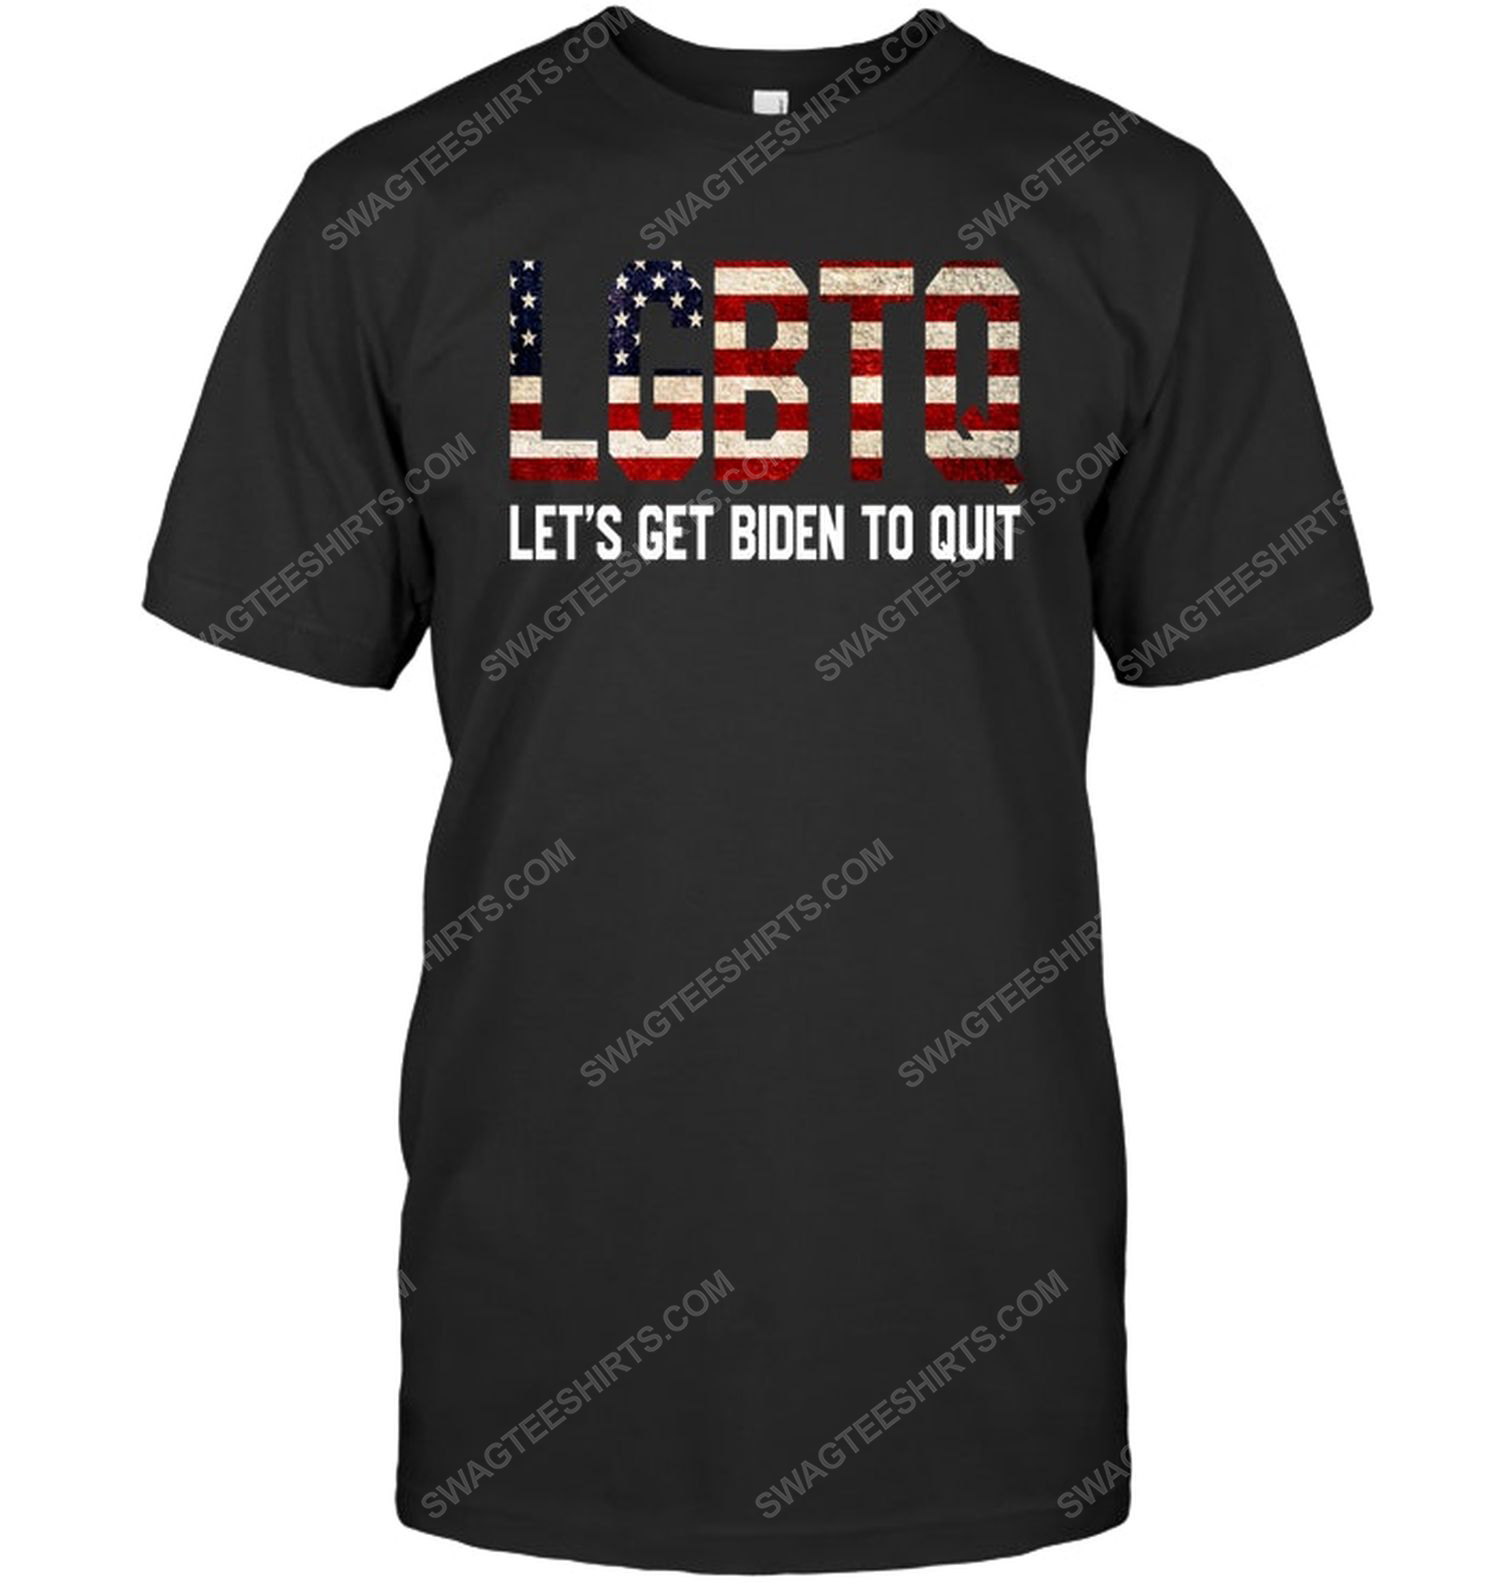 LGBTQ let's get biden to quit american flag political tshirt